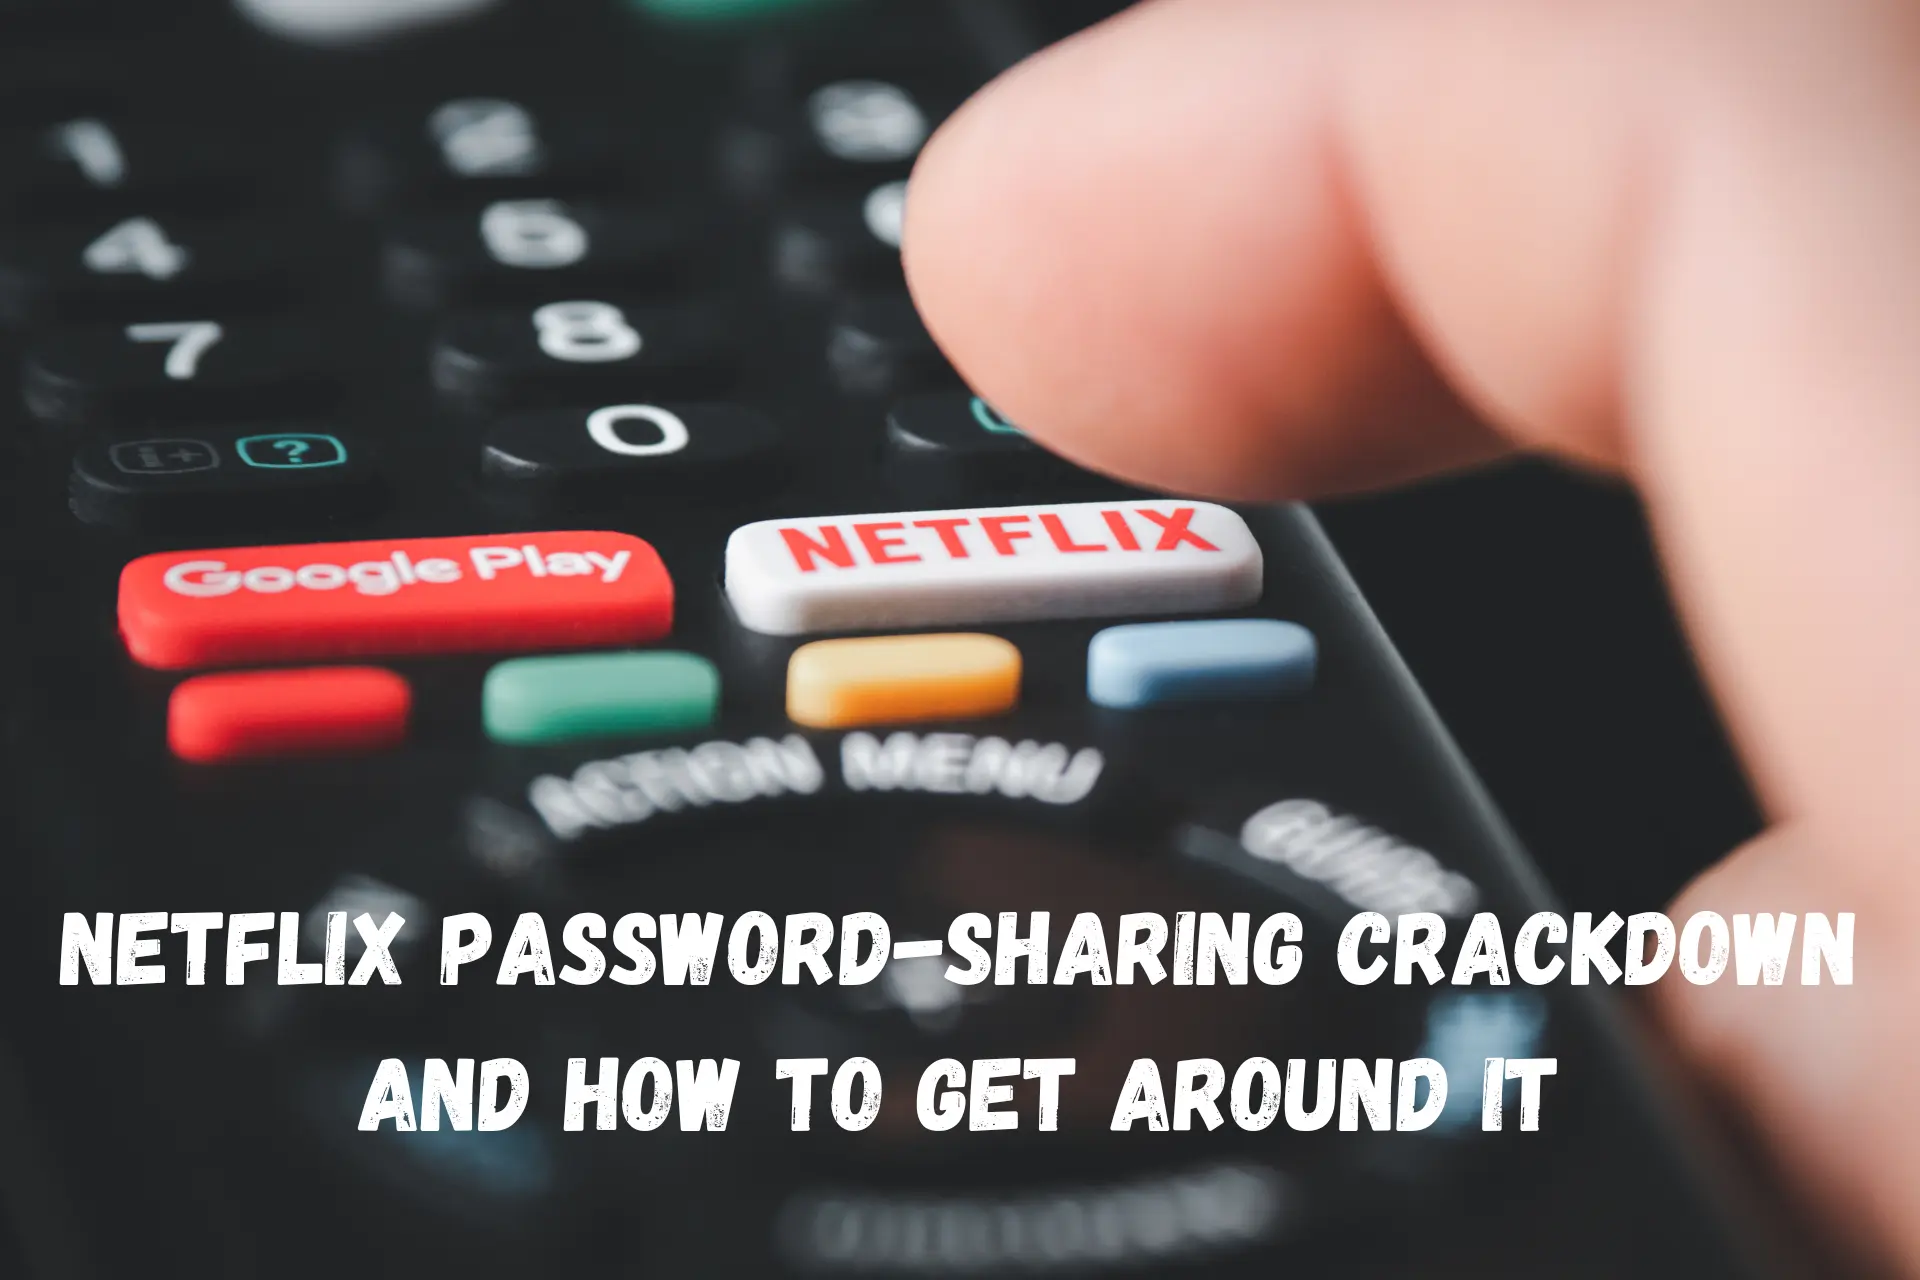 Netflix password-sharing crackdown